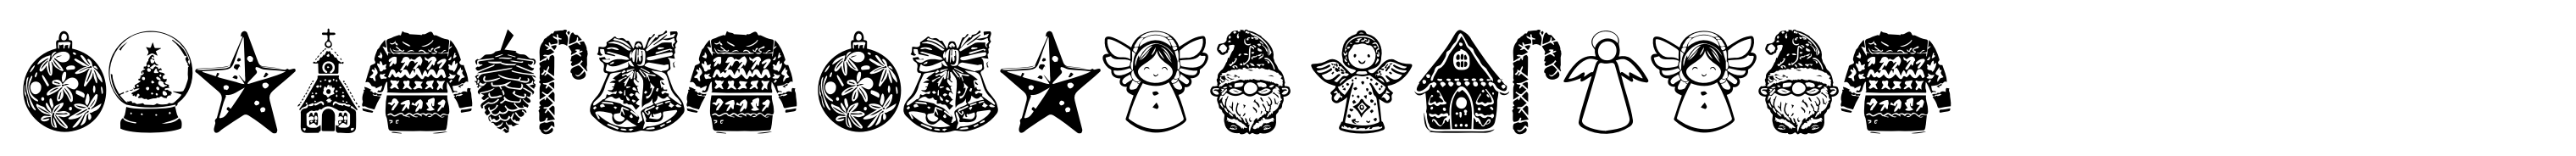 Christmas Carol Symbols